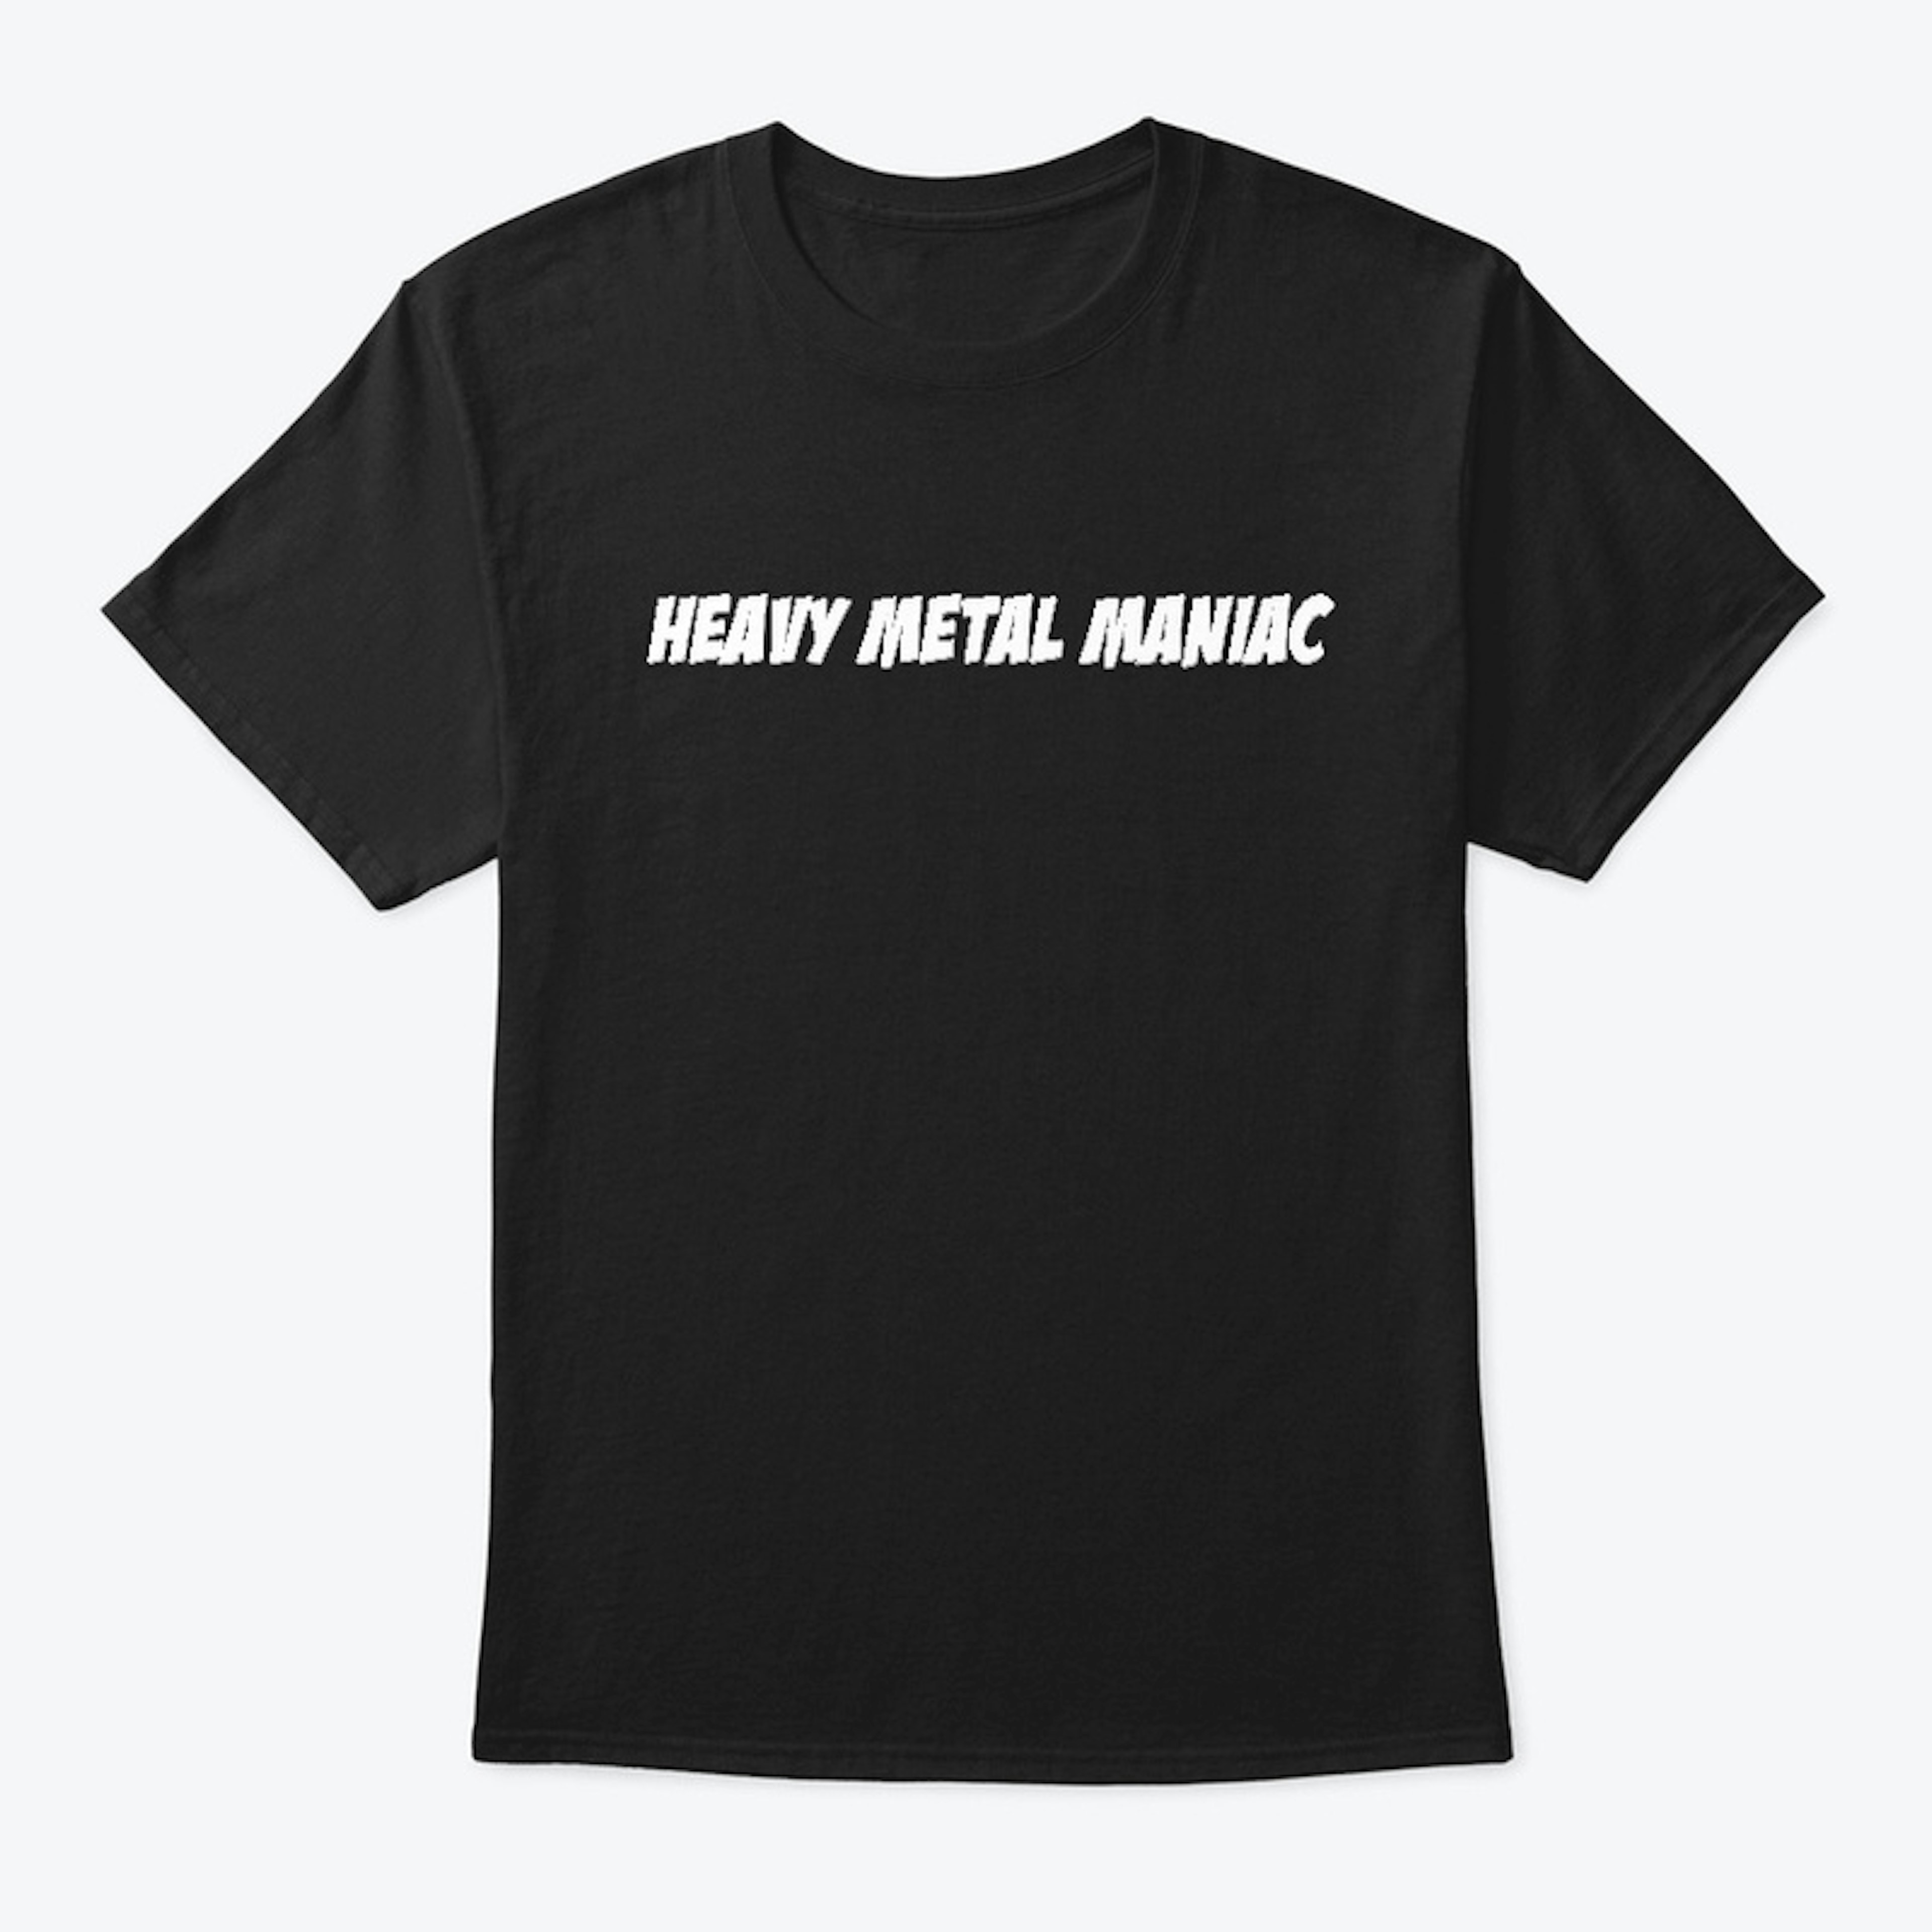 Heavy Metal maniac